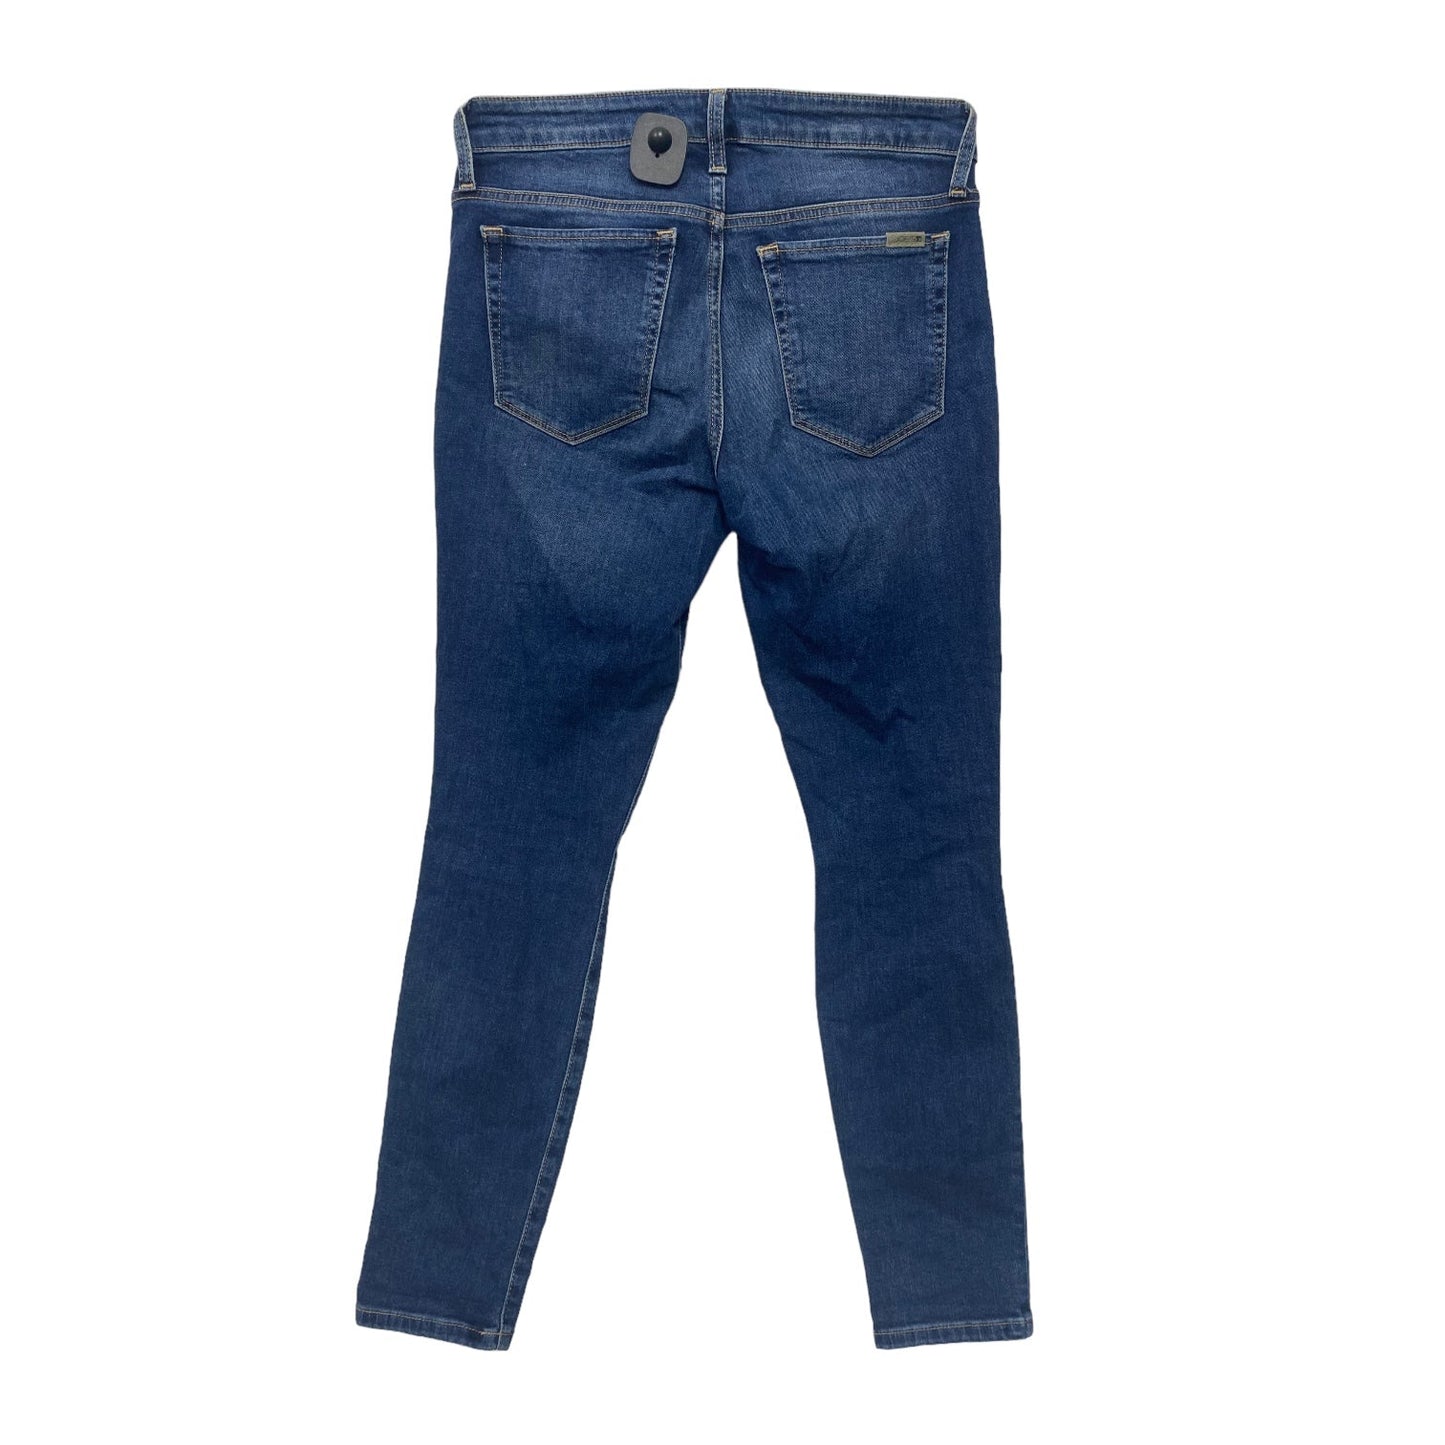 Blue Denim Jeans Skinny Joes Jeans, Size 6